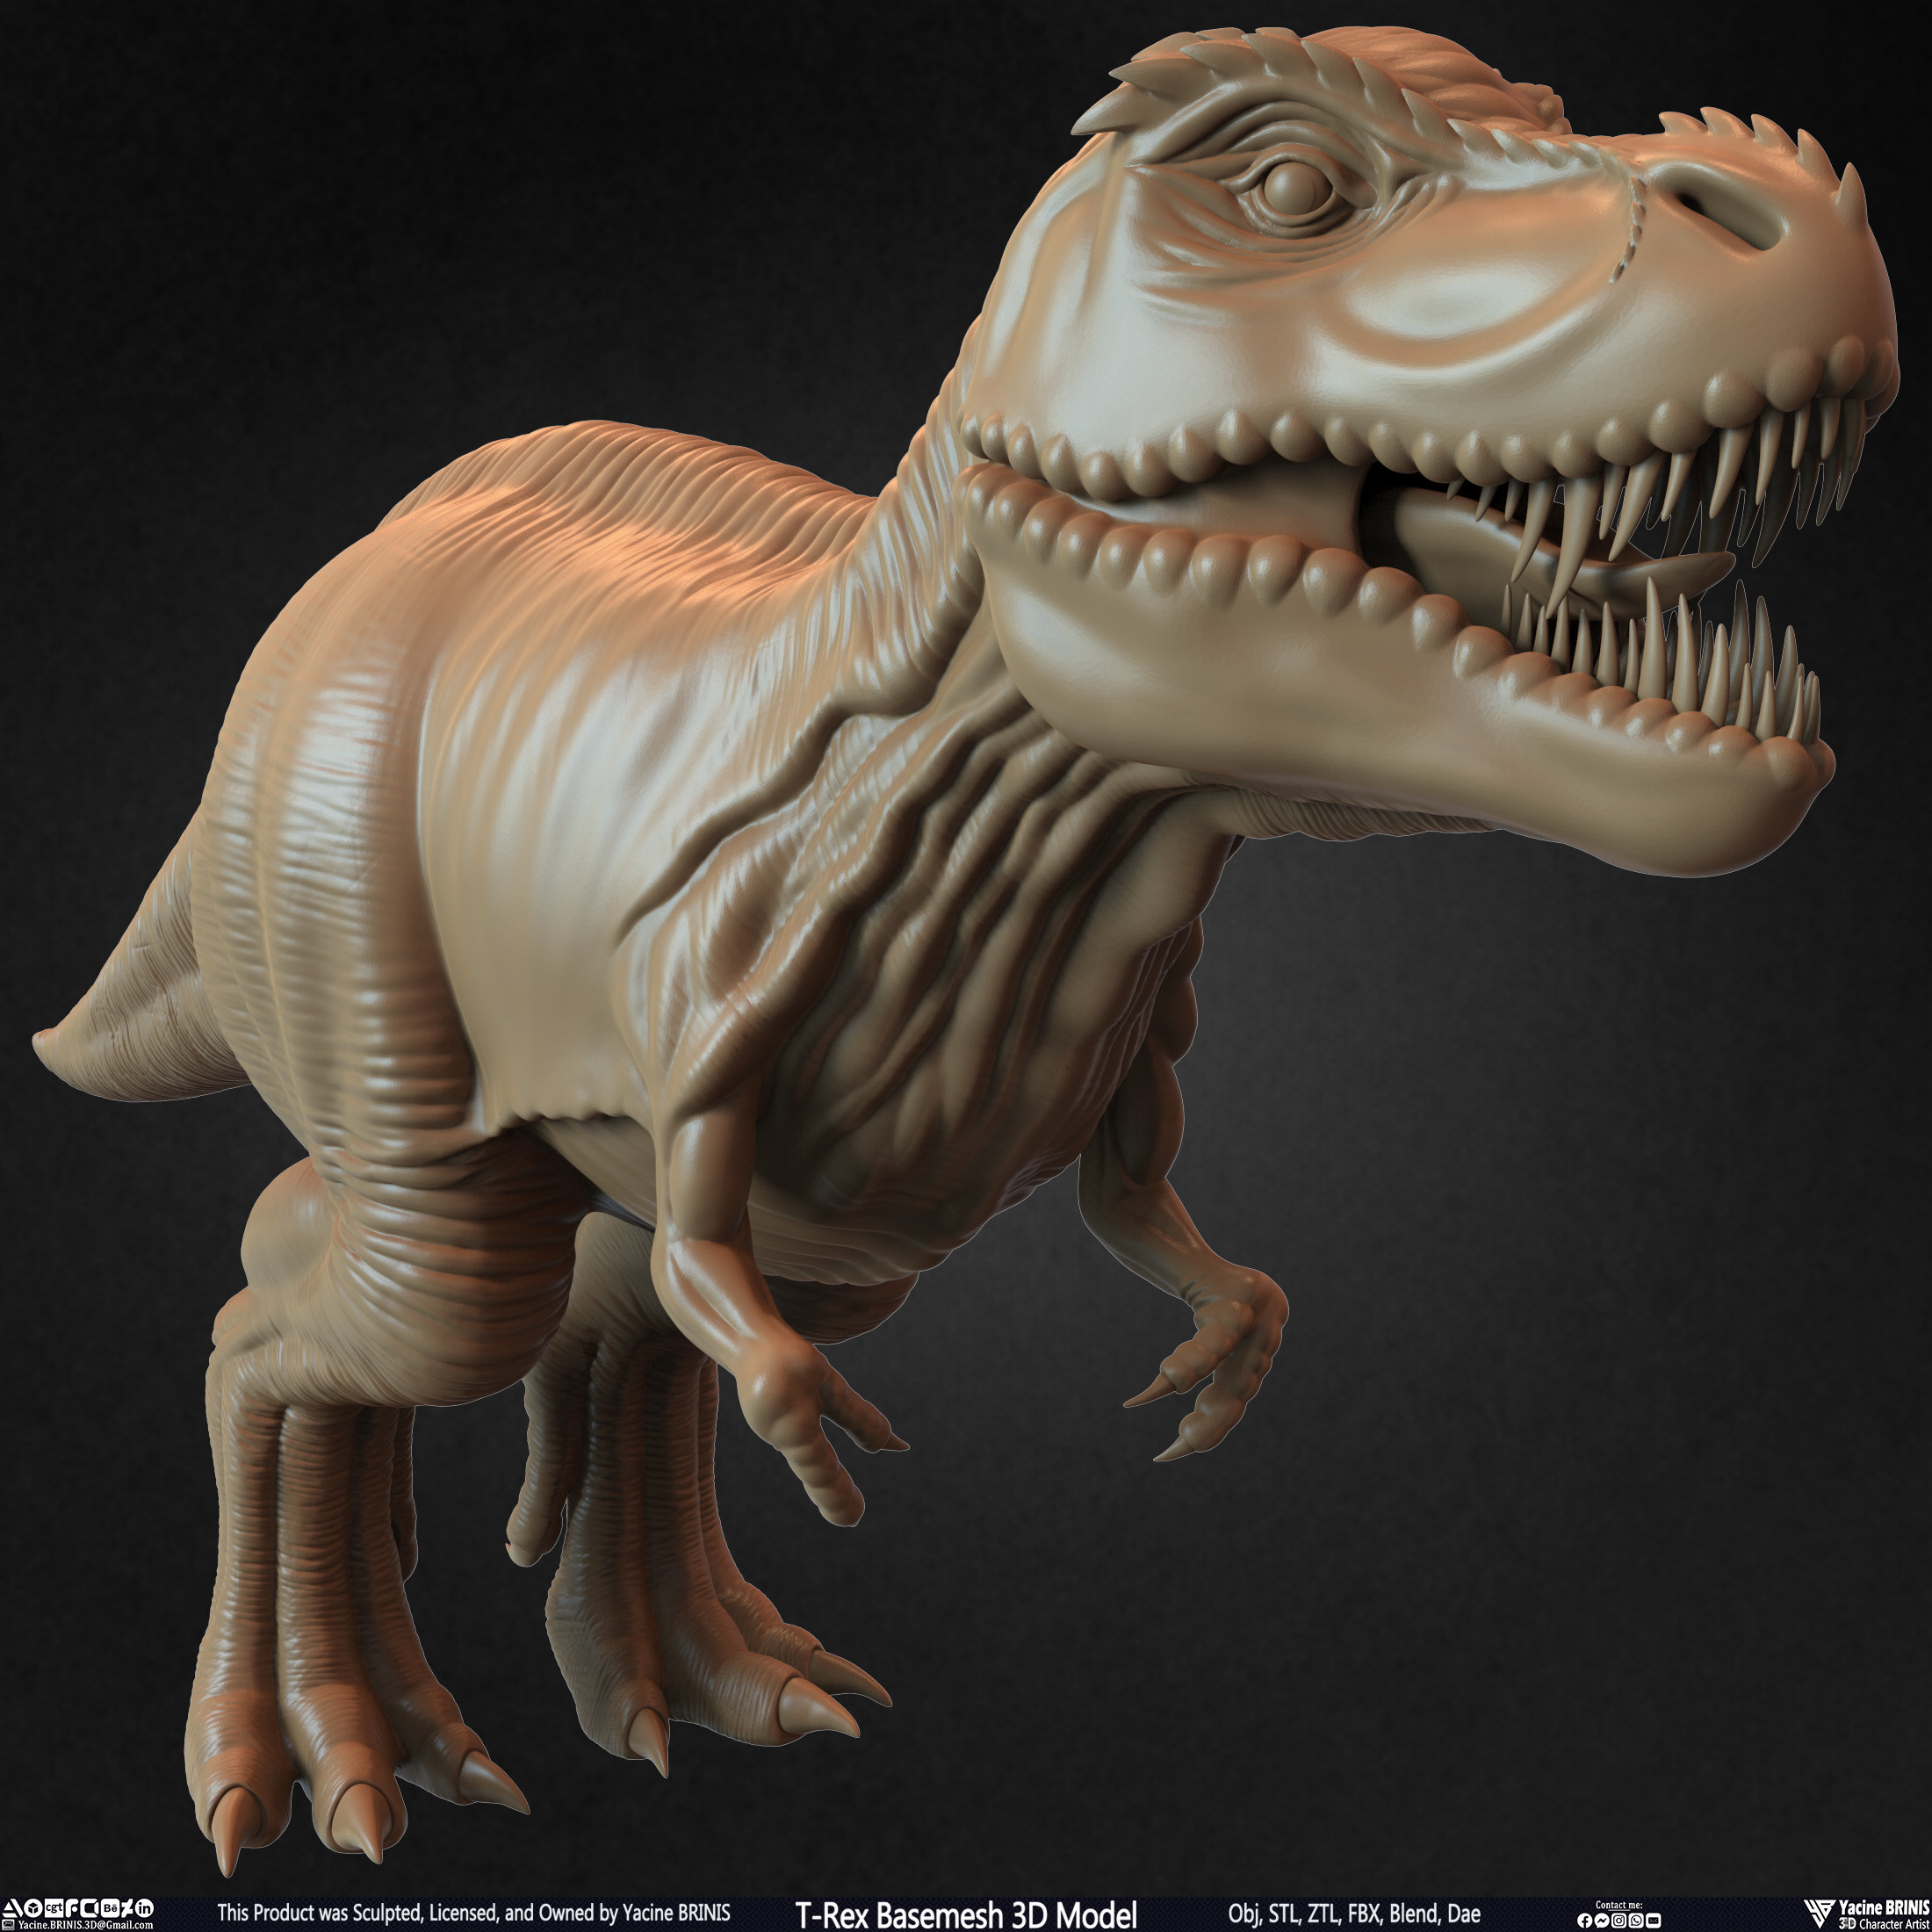 T-Rex Basemesh 3D Model (Tyrannosaurus Rex) Sculpted By Yacine BRINIS Set 002